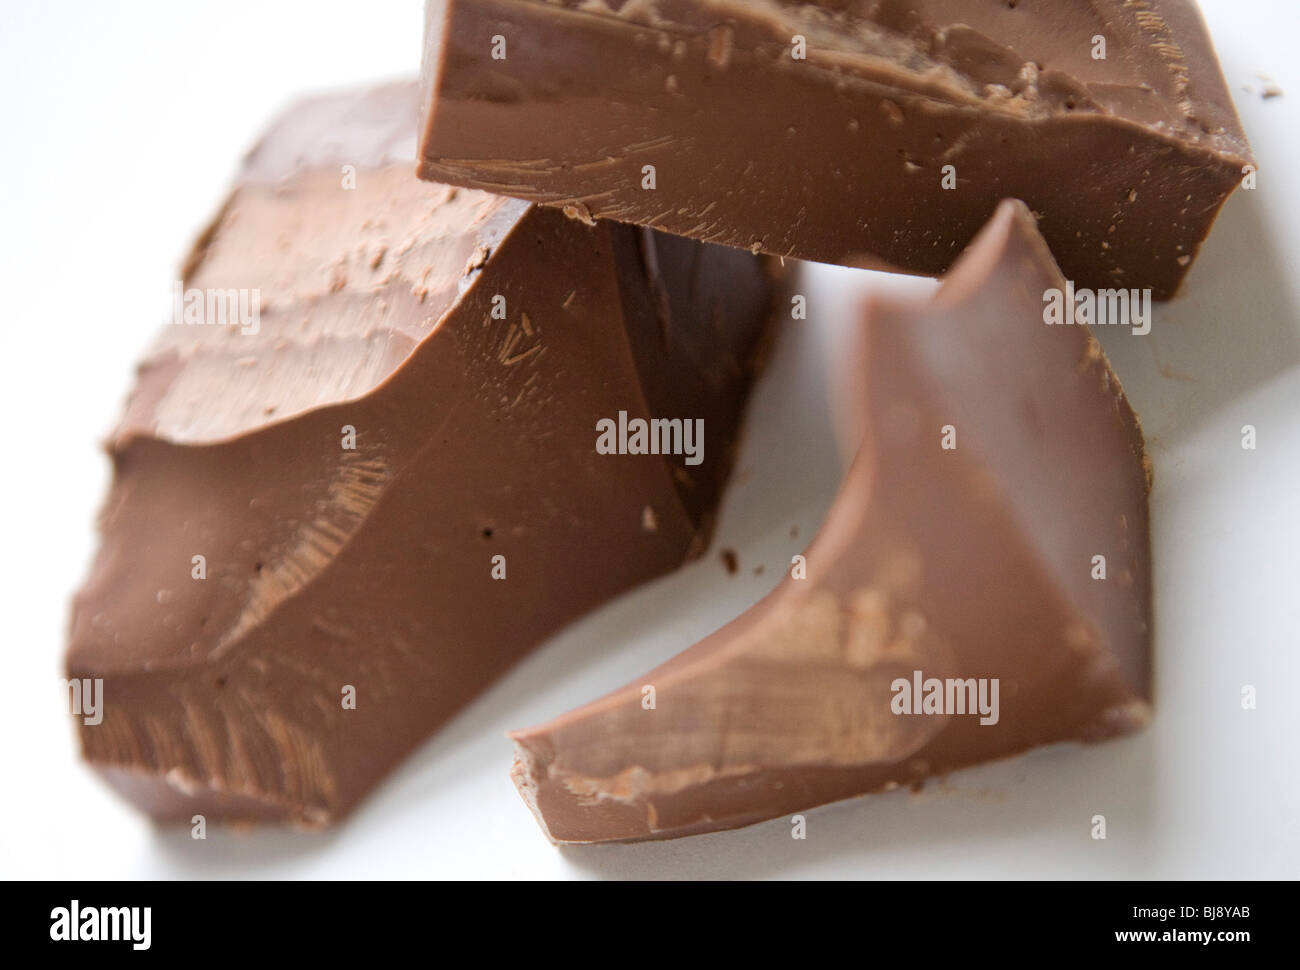 A block of milk chocolate. Stock Photo